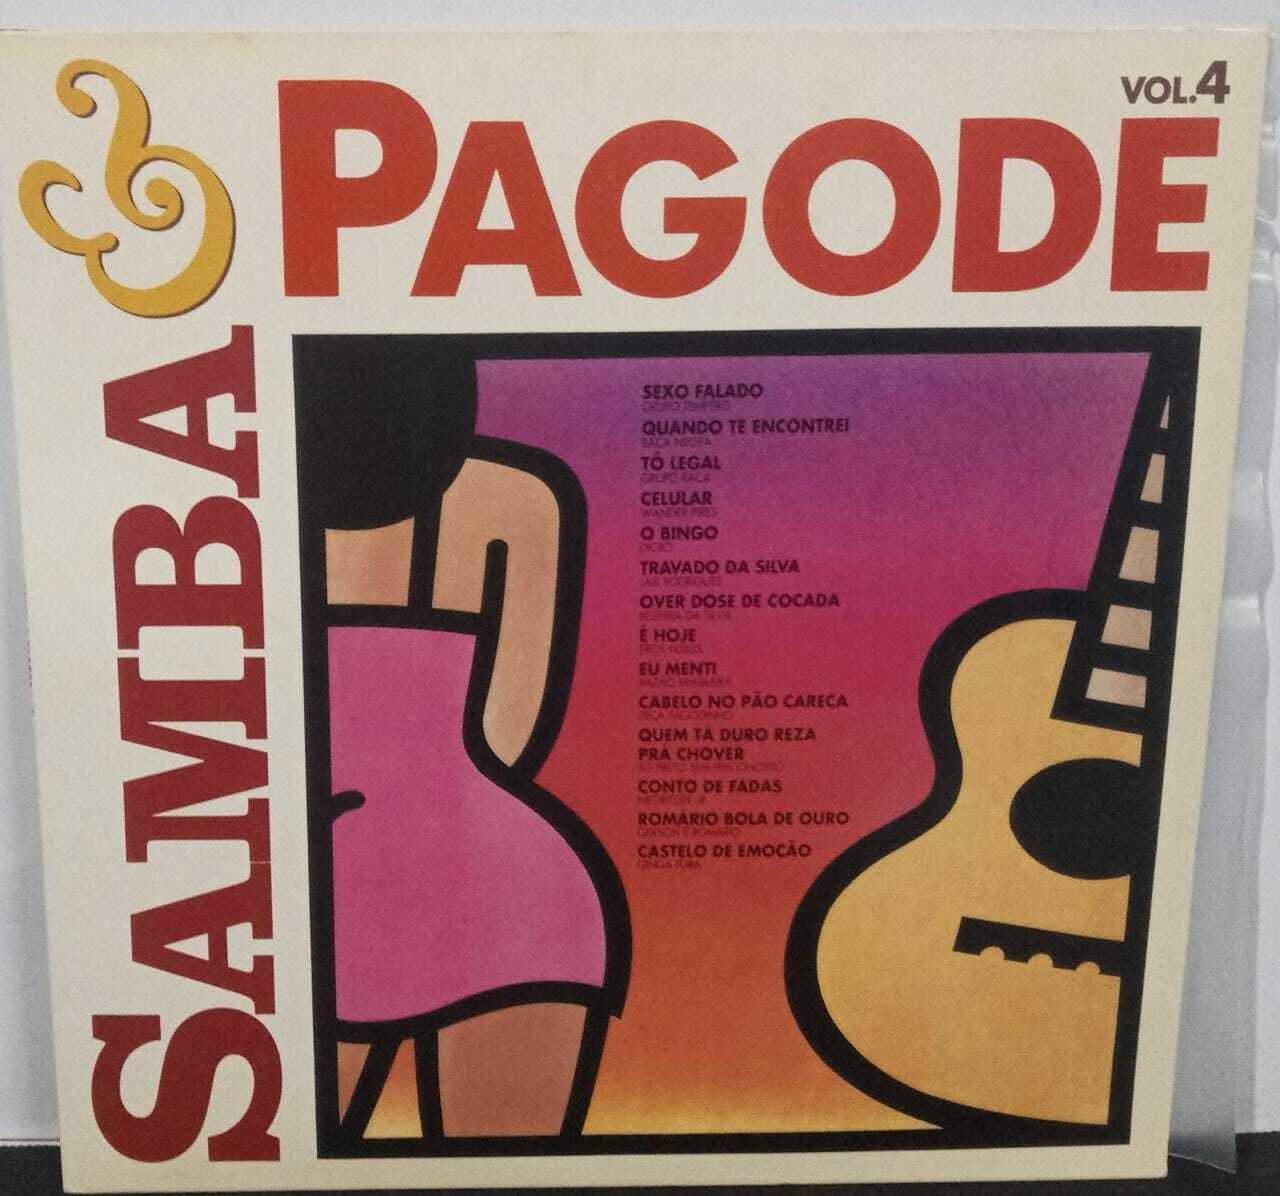 Vinil - Samba e Pagode Vol 4